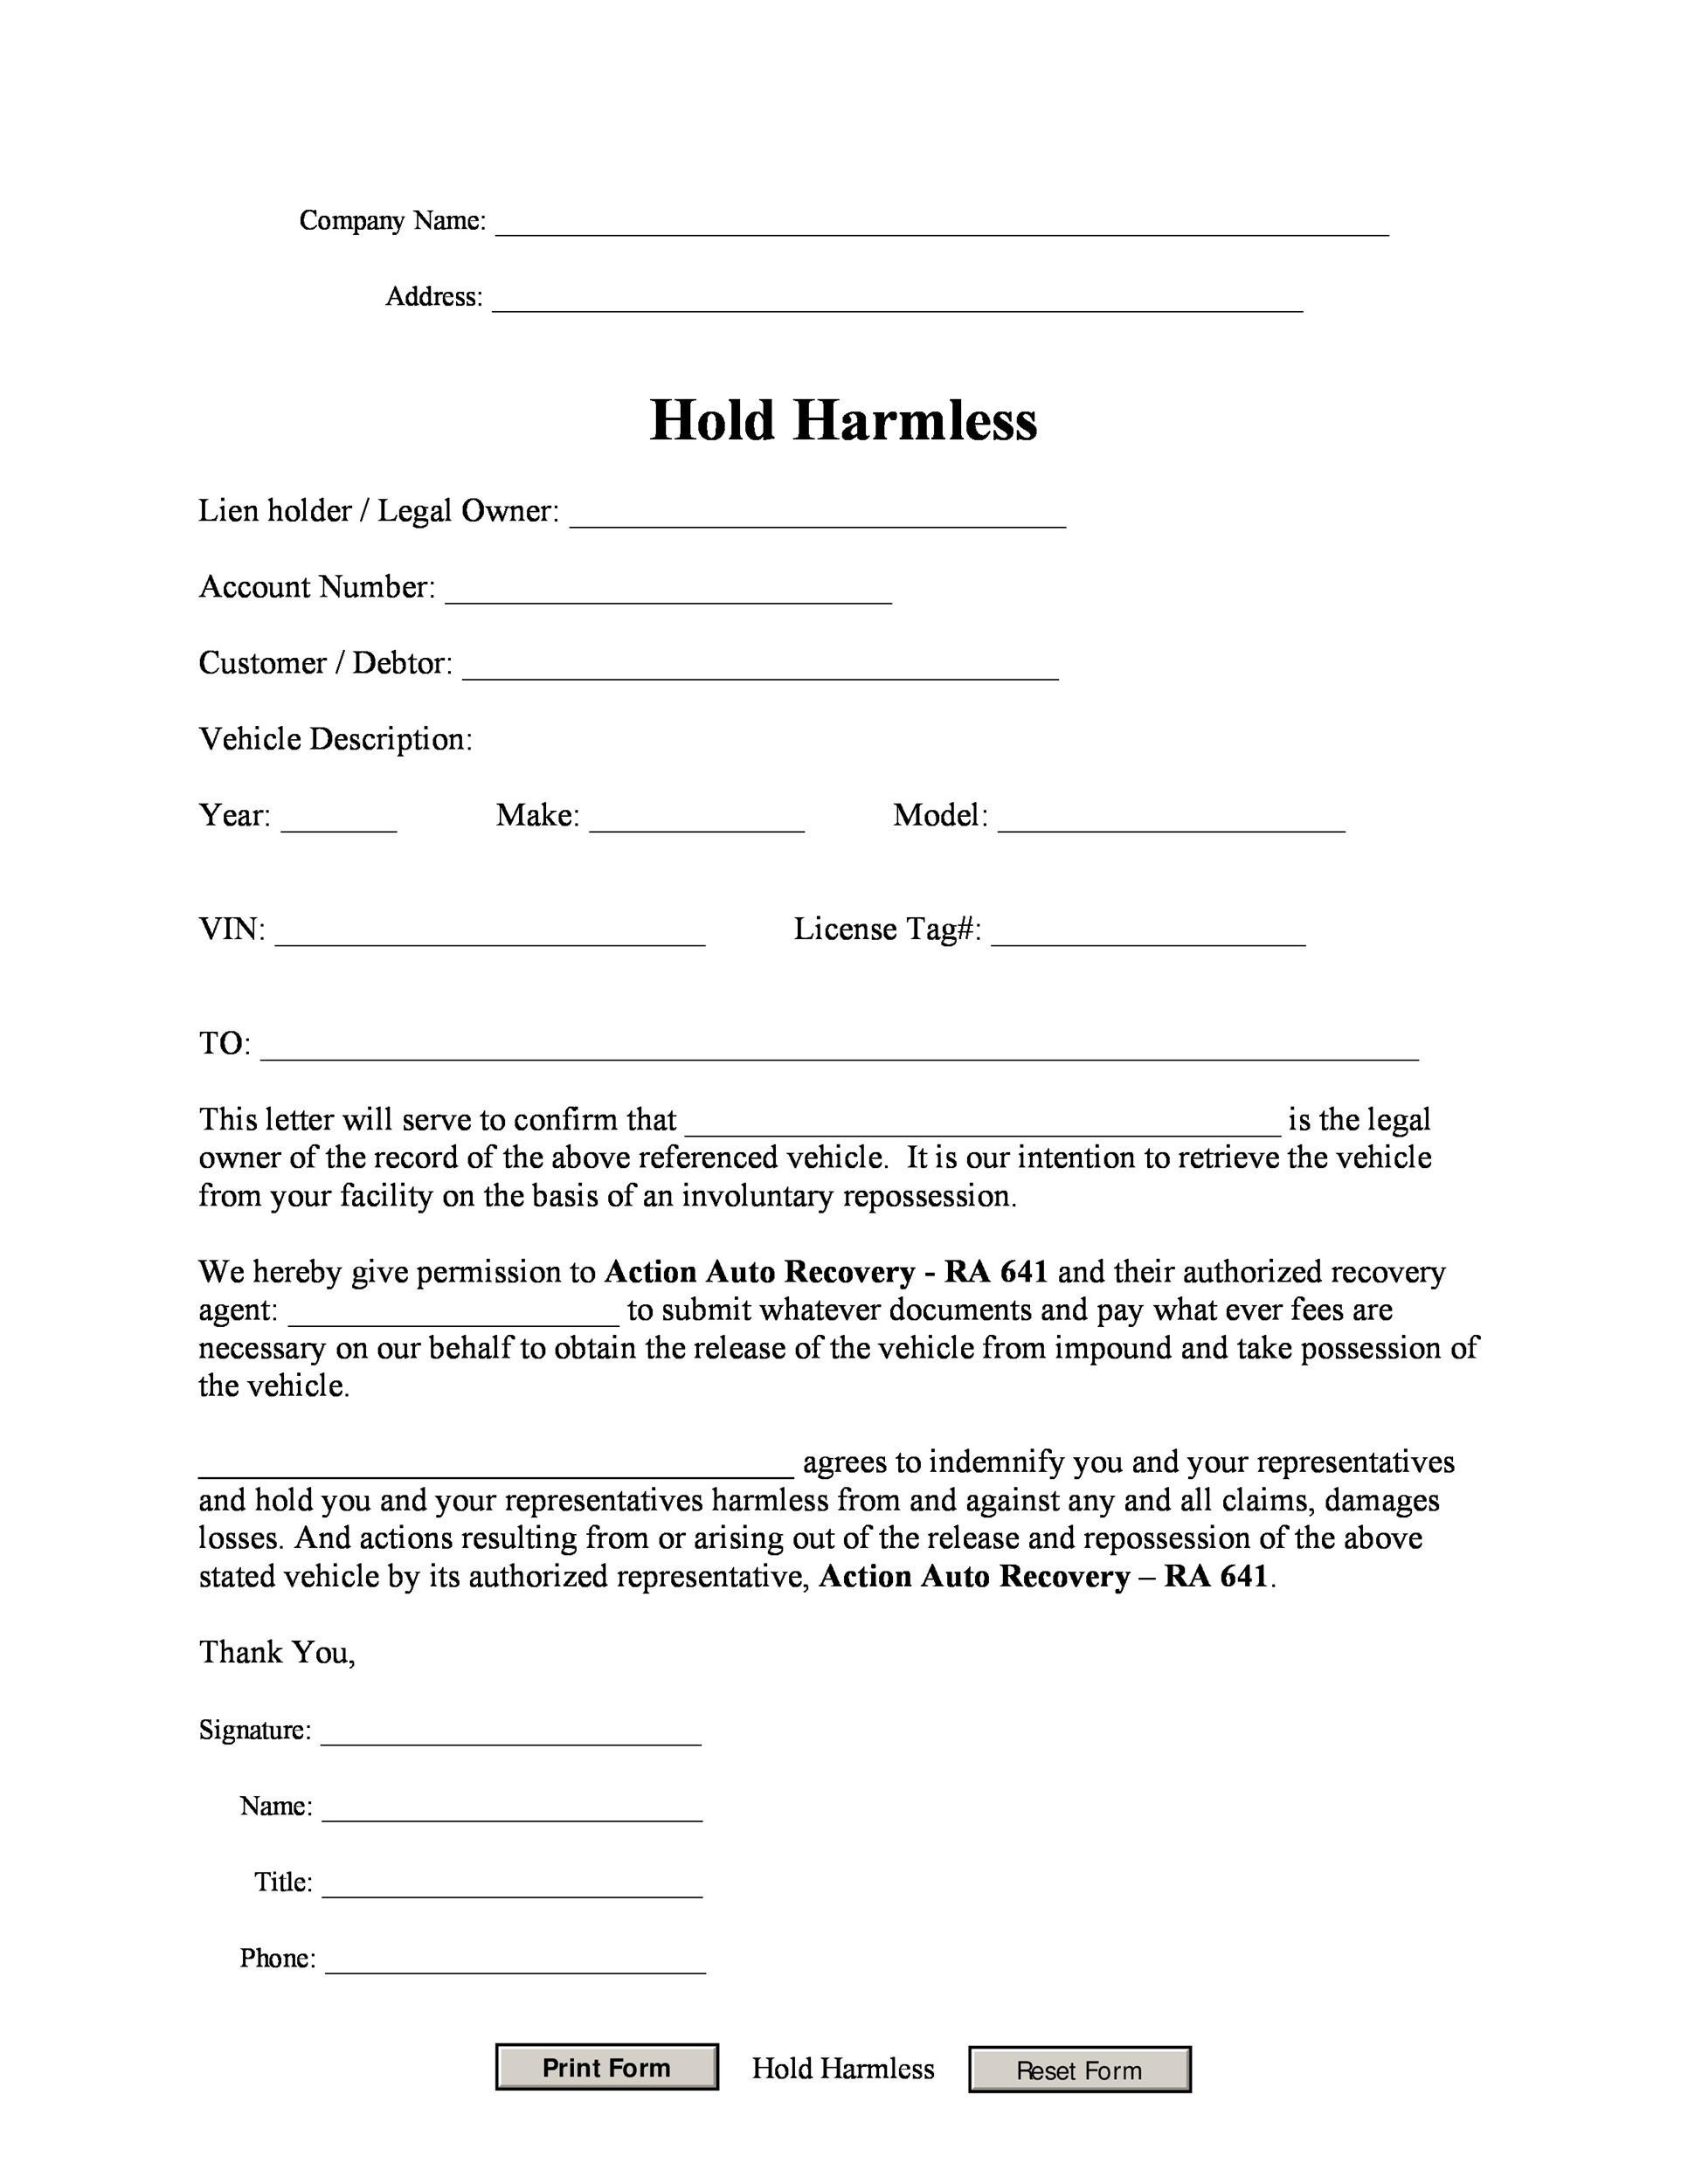 hold-harmless-agreement-template